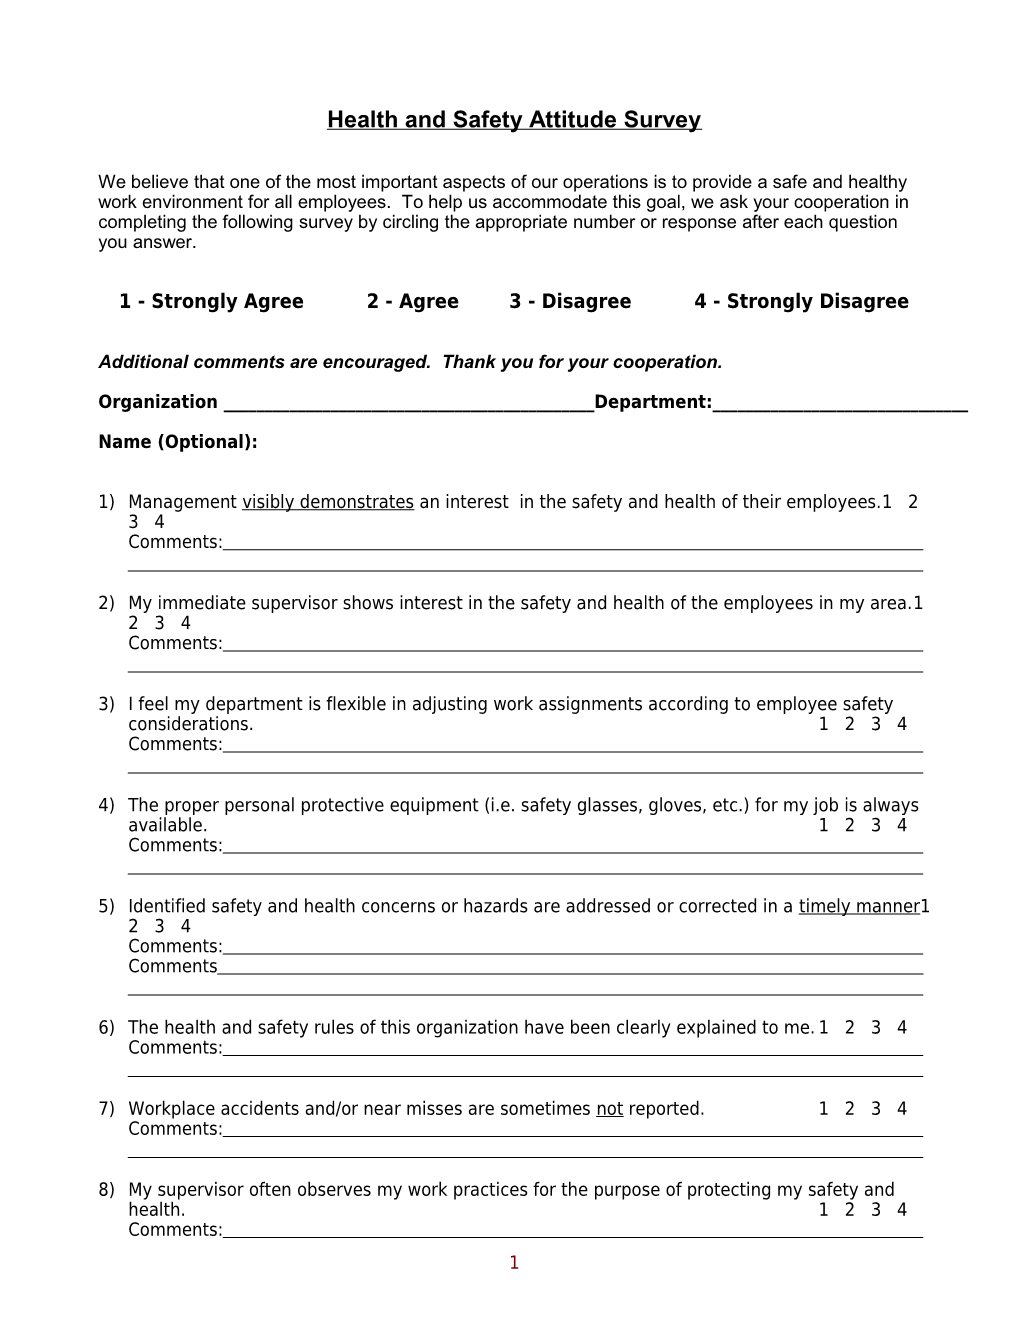 Safety & Health Survey Form - 8/28/94